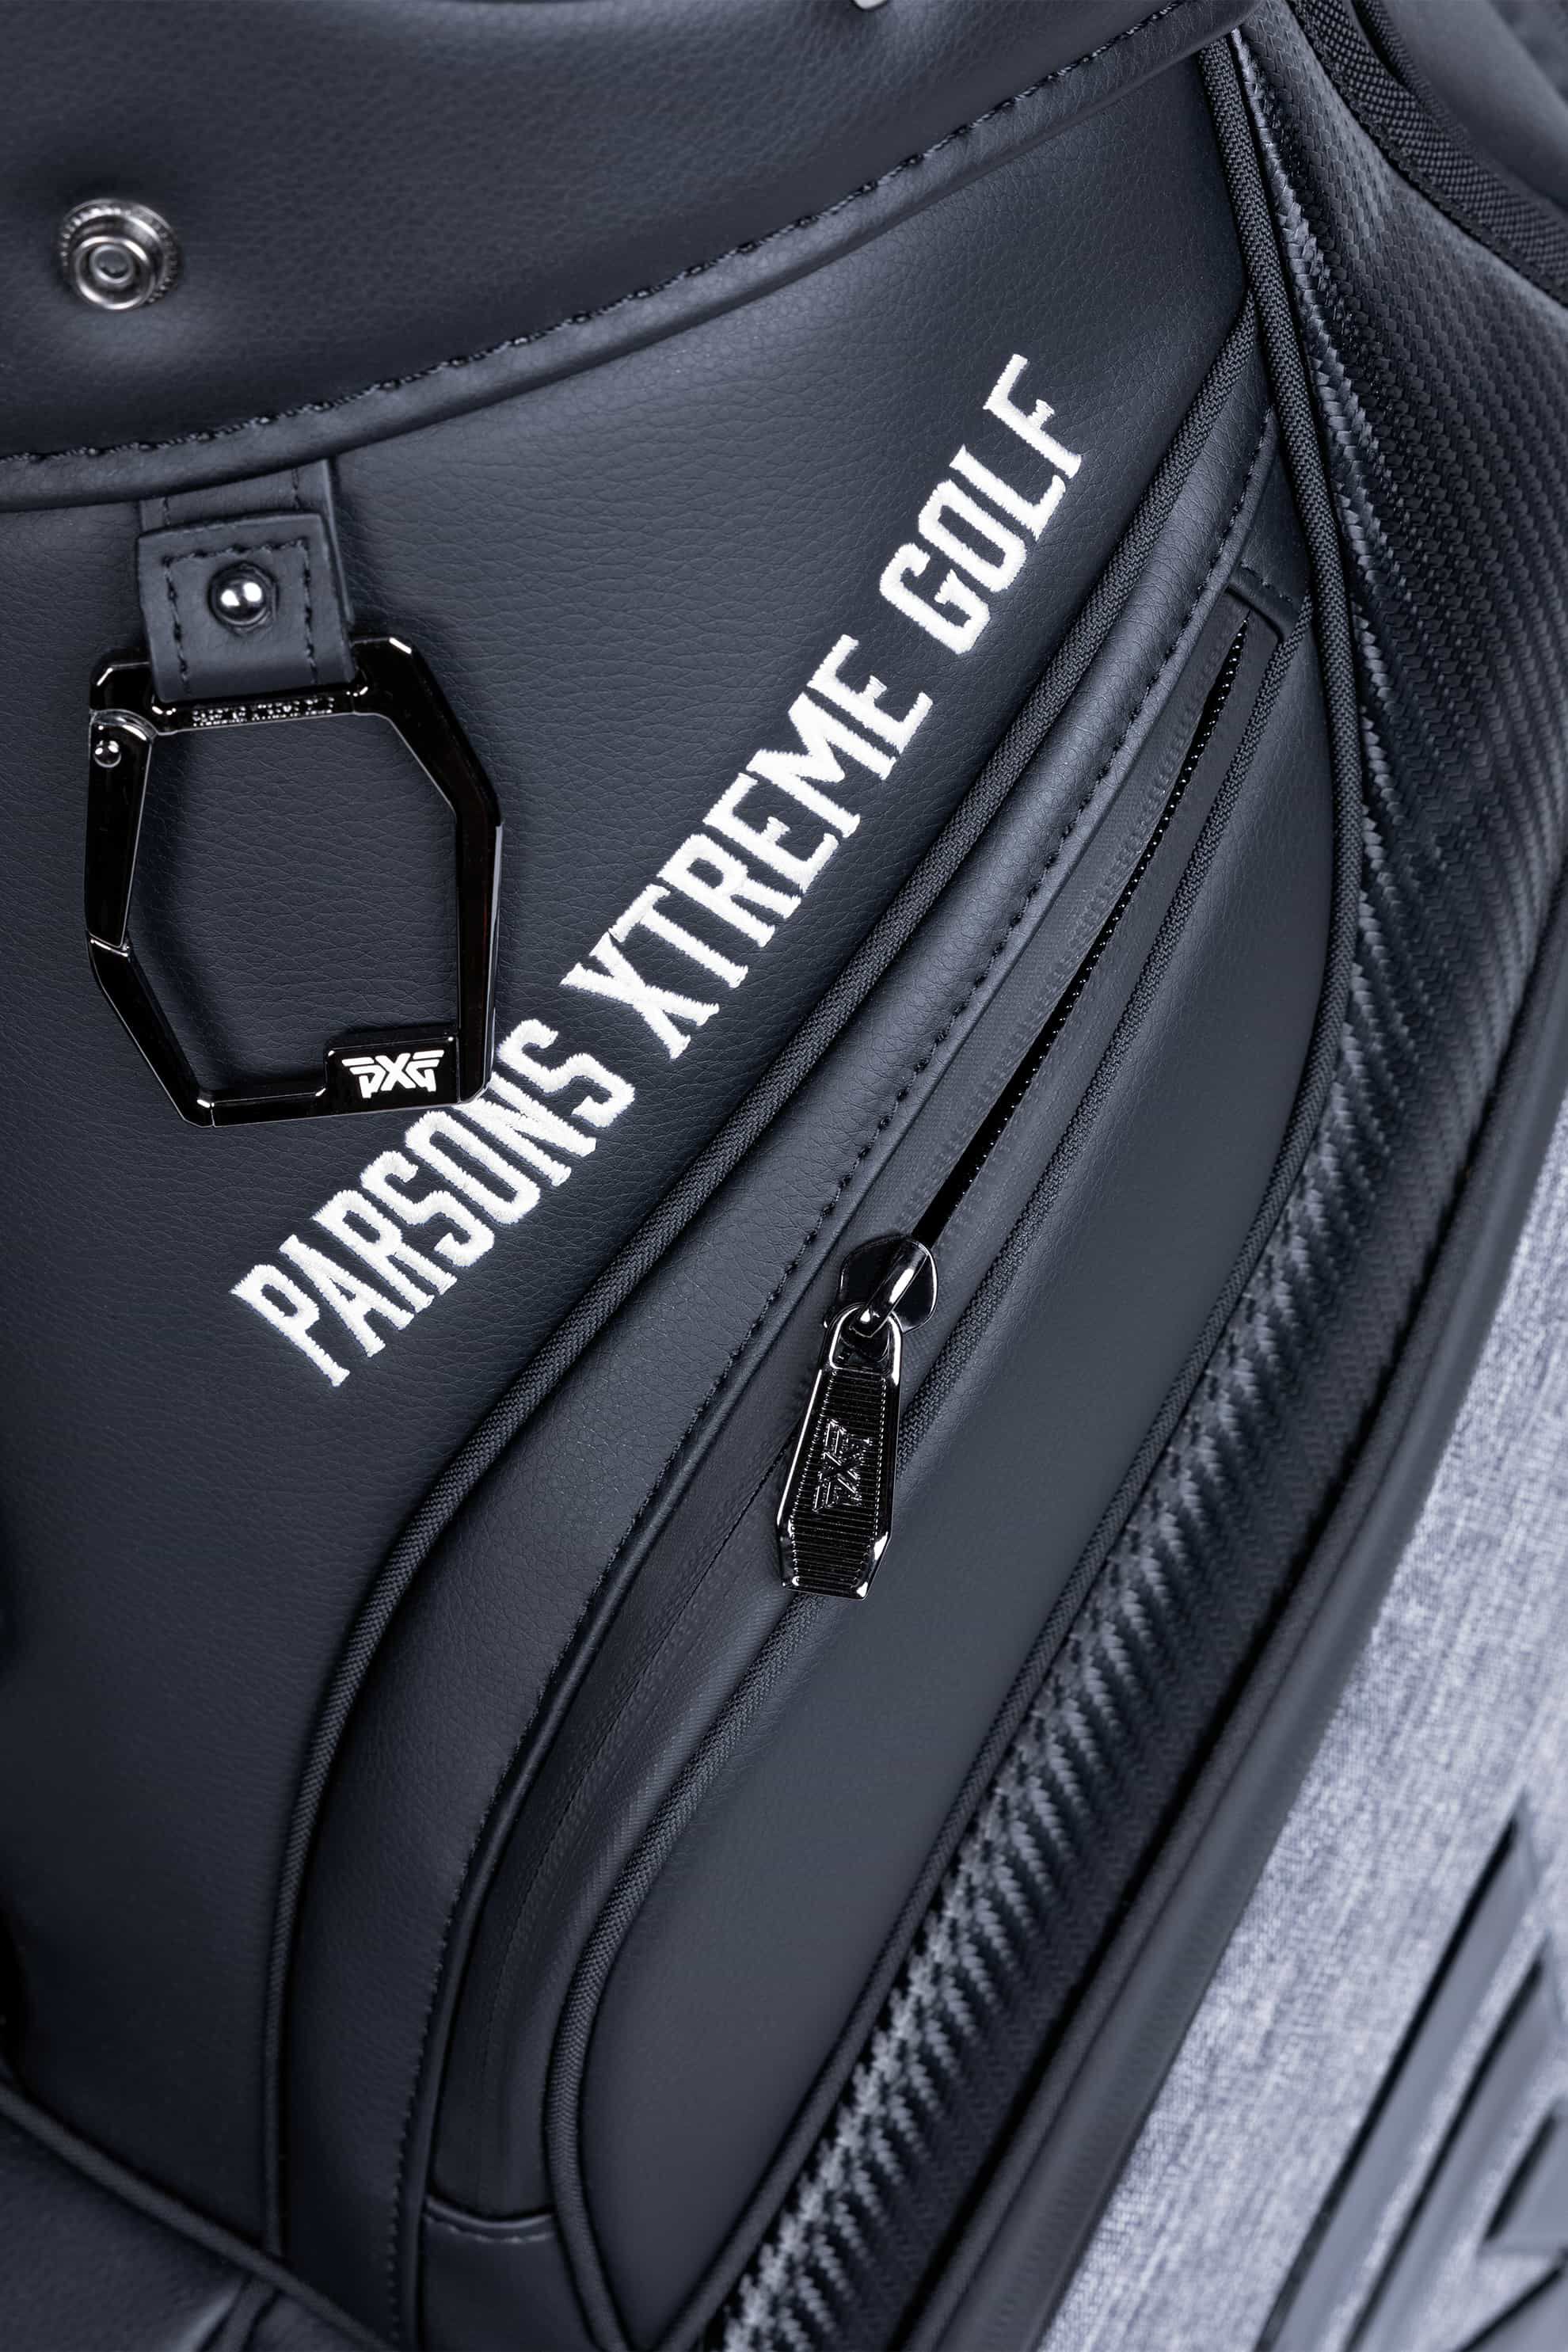 2022 Tour Staff Bag | Golf Bags | Standing, Carry & Cart Bags - PXG